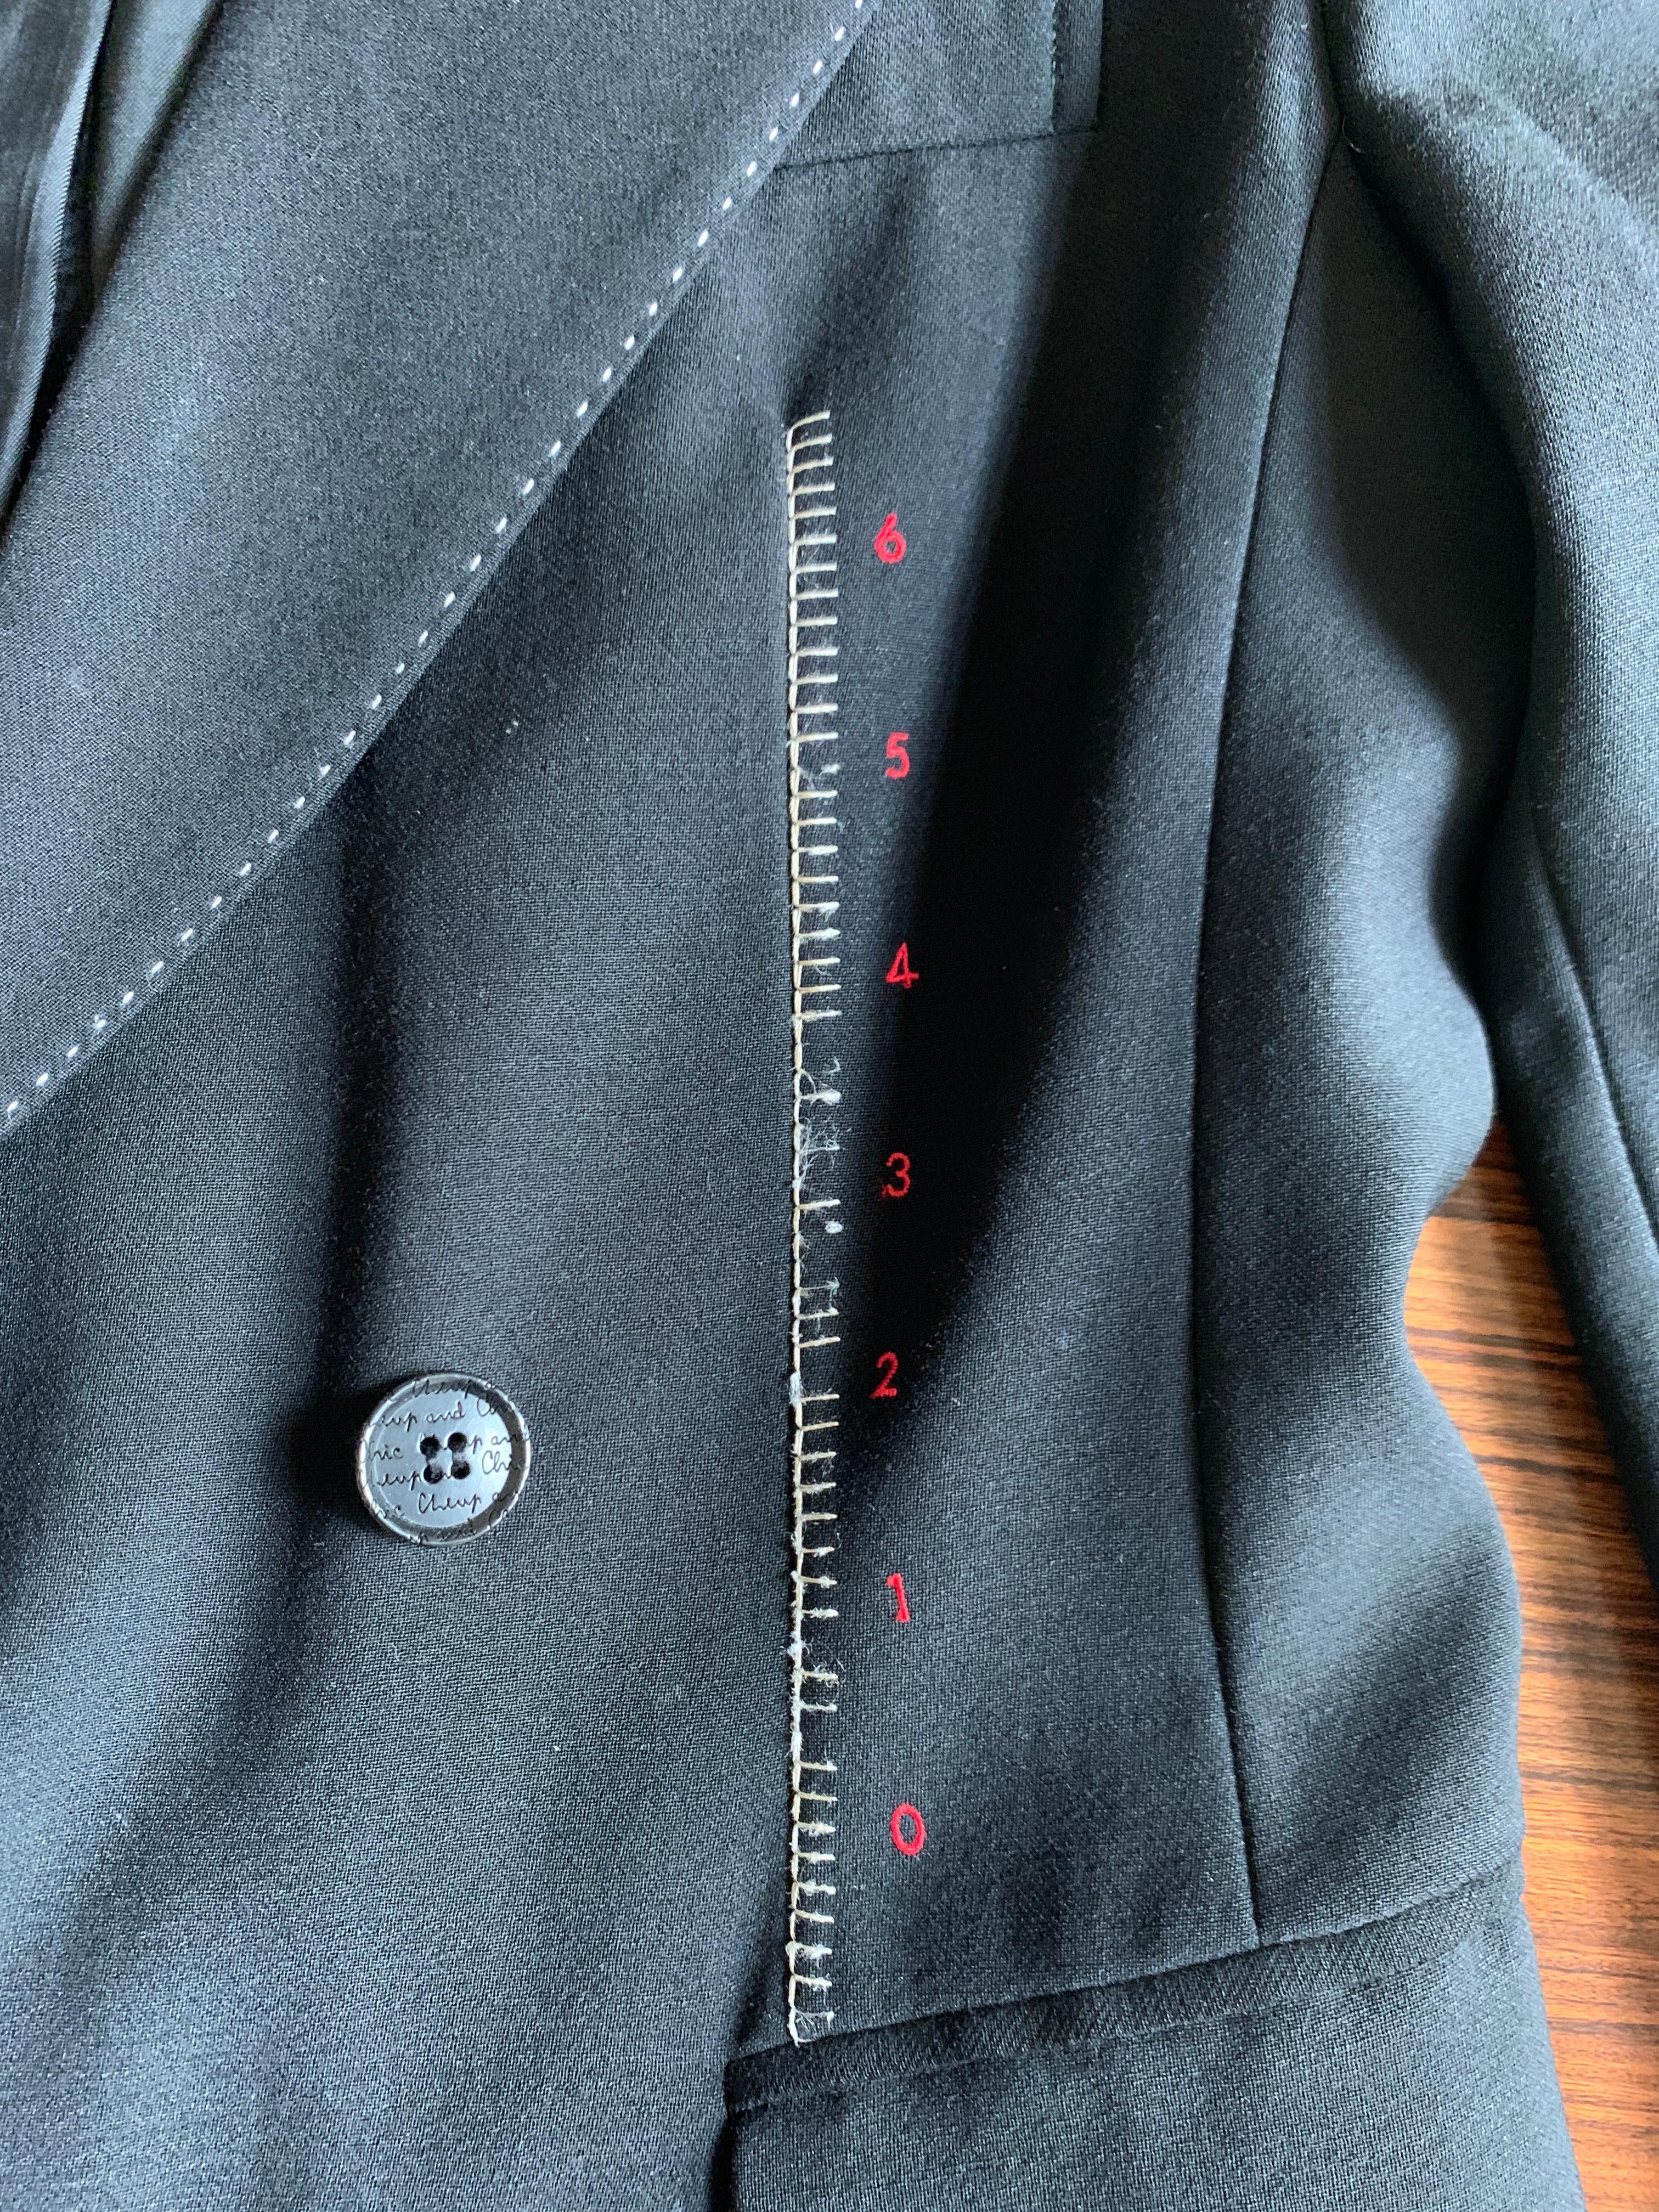 Moschino Cheap & Chic 1990s Charts & Graphs Black Blazer Jacket 9